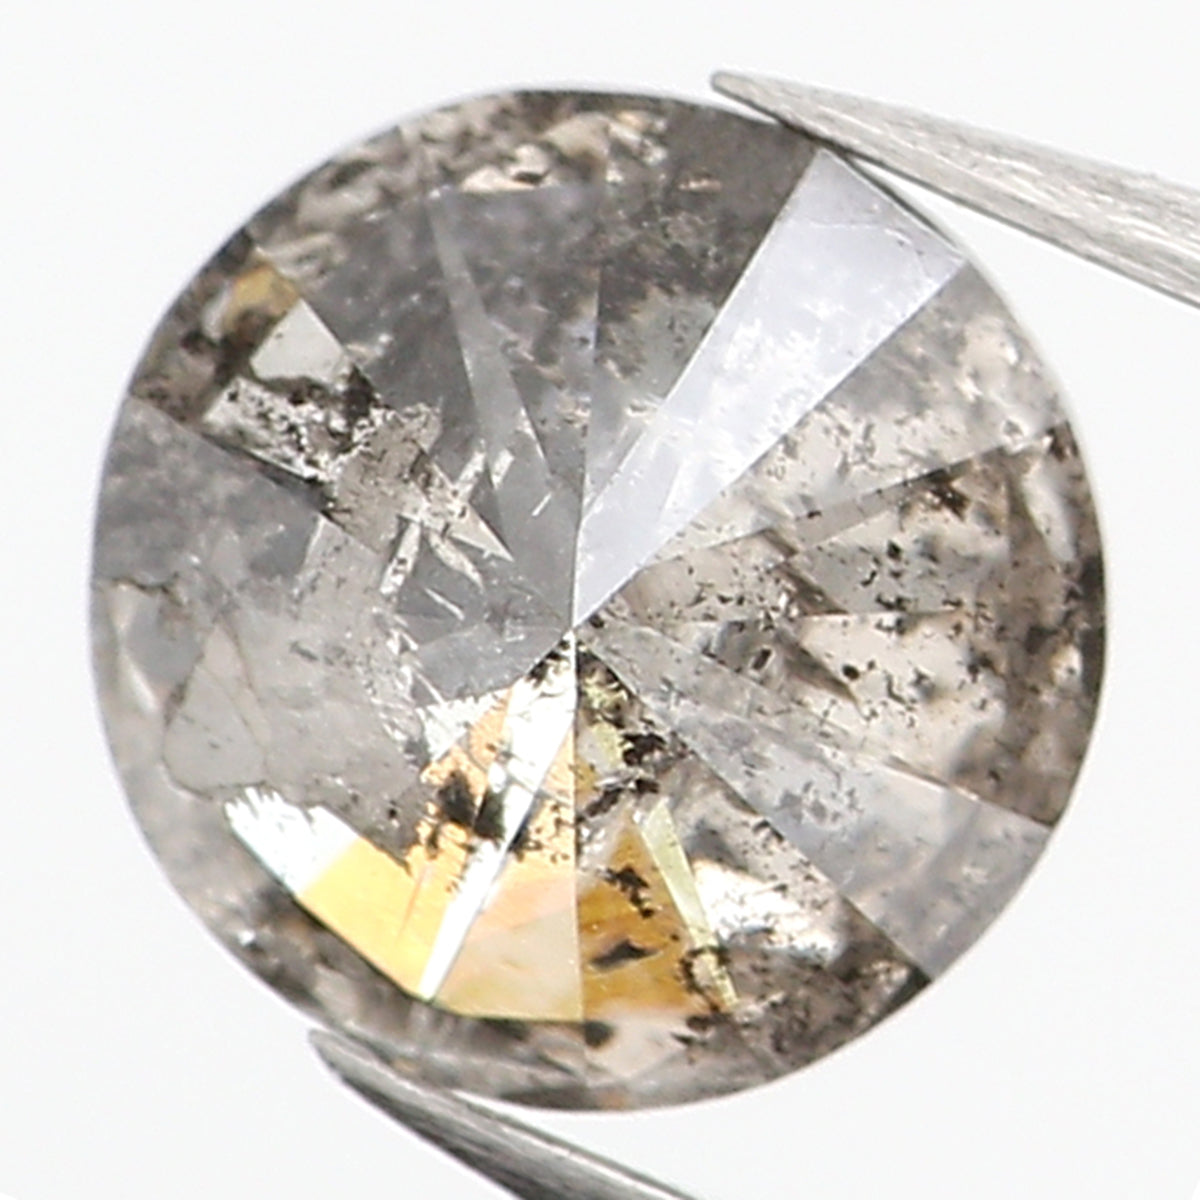 0.82 Ct Natural Loose Diamond, Salt And Pepper Diamond, Round Brilliant Cut Diamond, Black Diamond, Grey Diamond, Rustic Diamond, L605